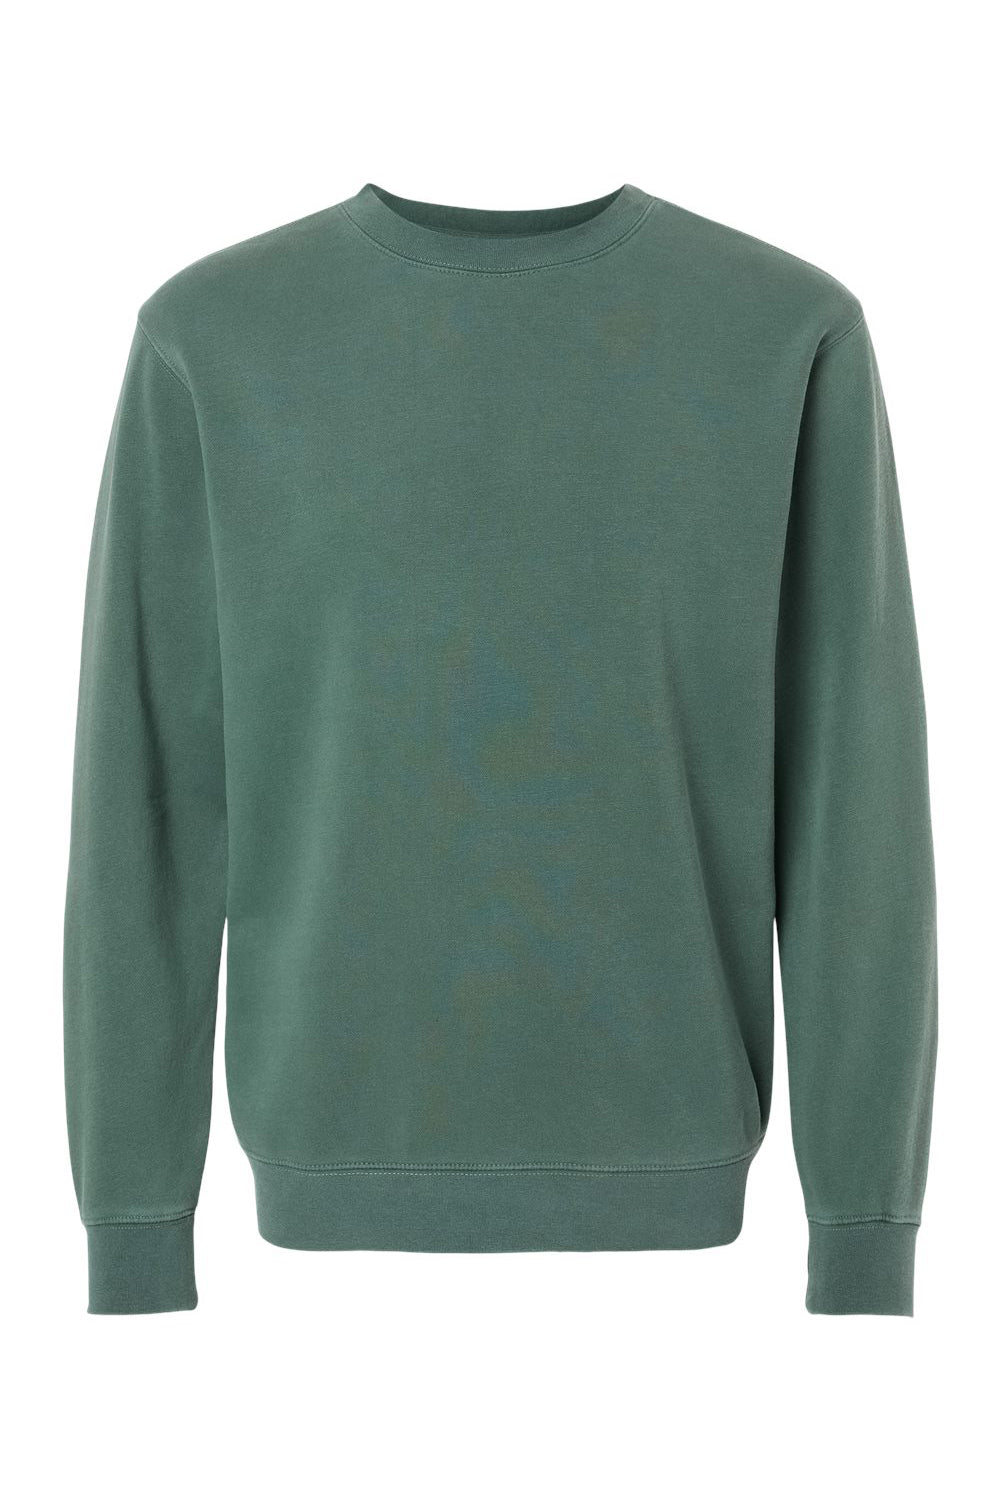 Independent Trading Co. PRM3500 Mens Pigment Dyed Crewneck Sweatshirt Alpine Green Flat Front